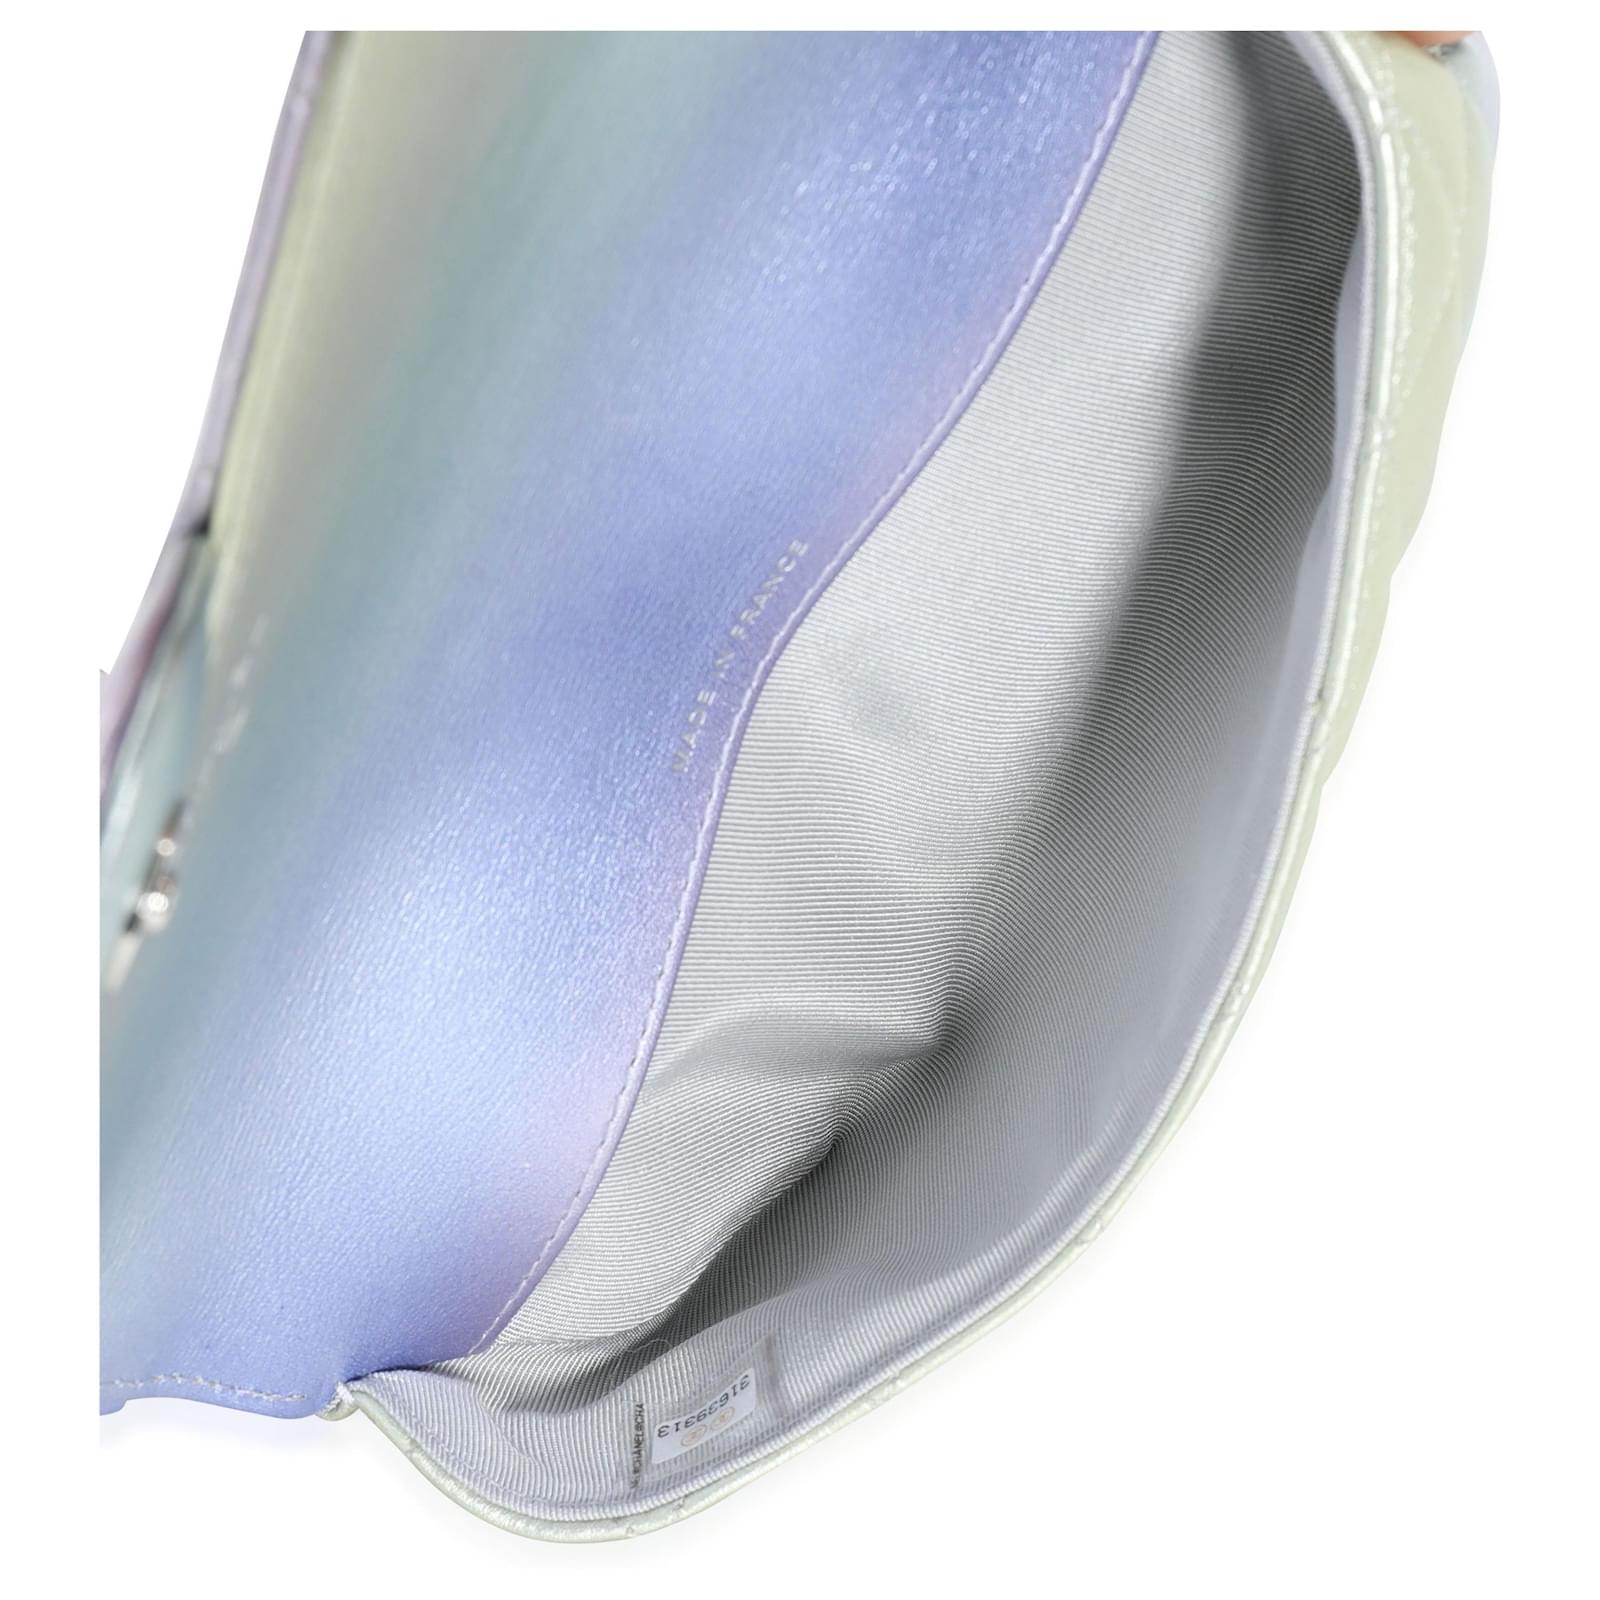 woc in Gradient Metallic Calfskin in Silver purple mix color – L